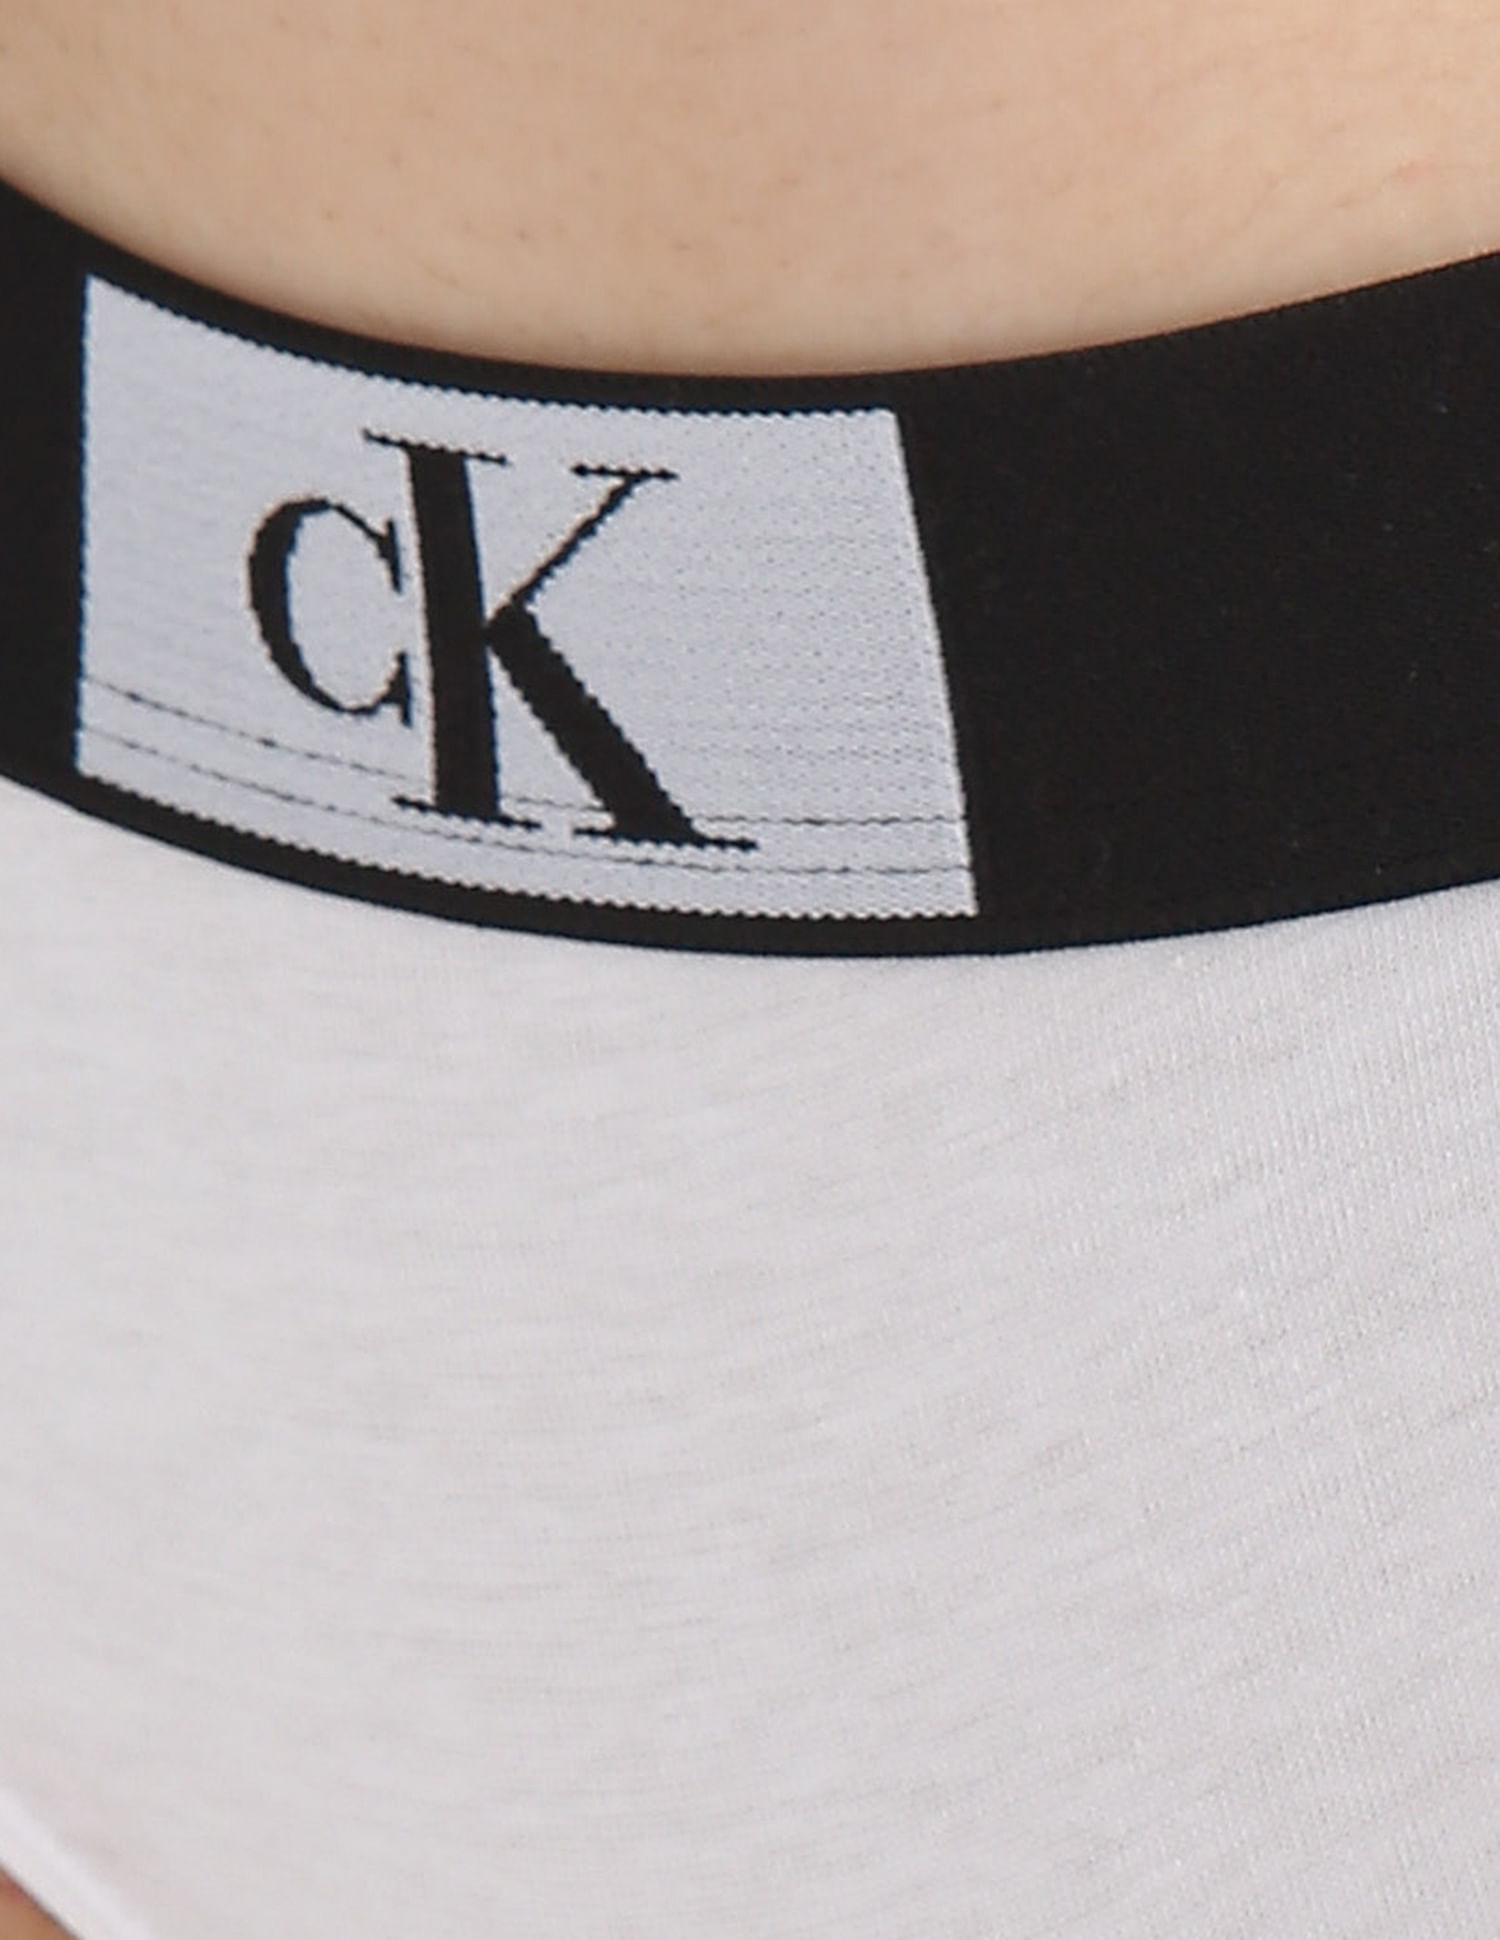 Buy Calvin Klein Underwear Reprocessed Cotton Solid Hipster Panties 